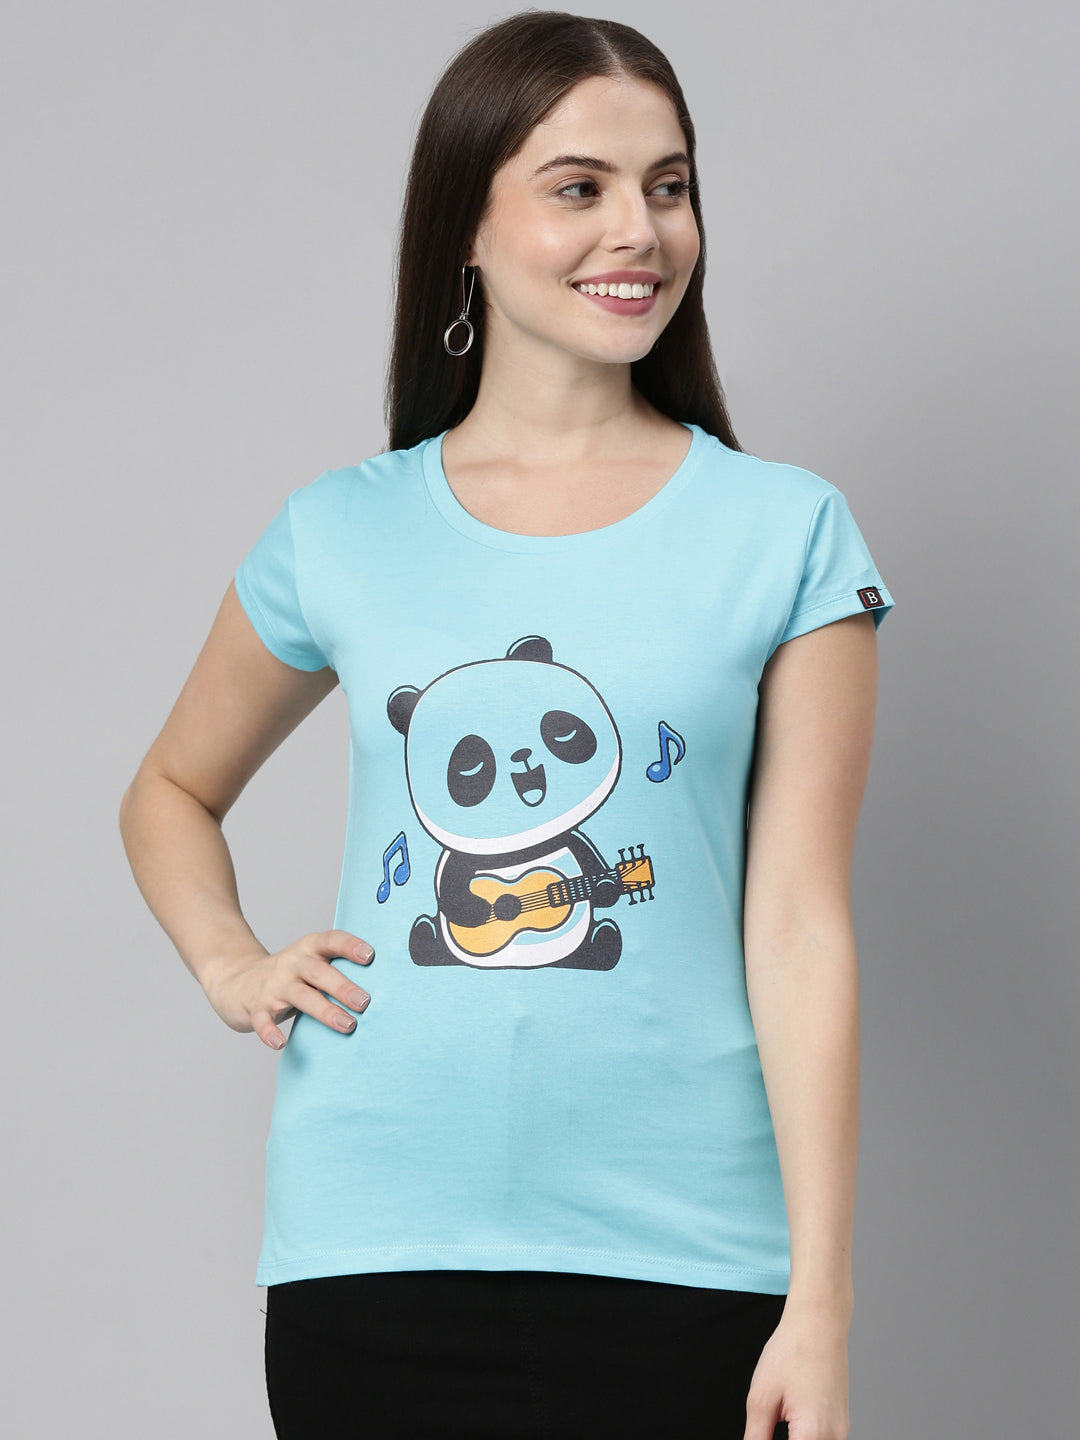 Music Panda T-Shirt Women's Graphic Tees Bushirt   